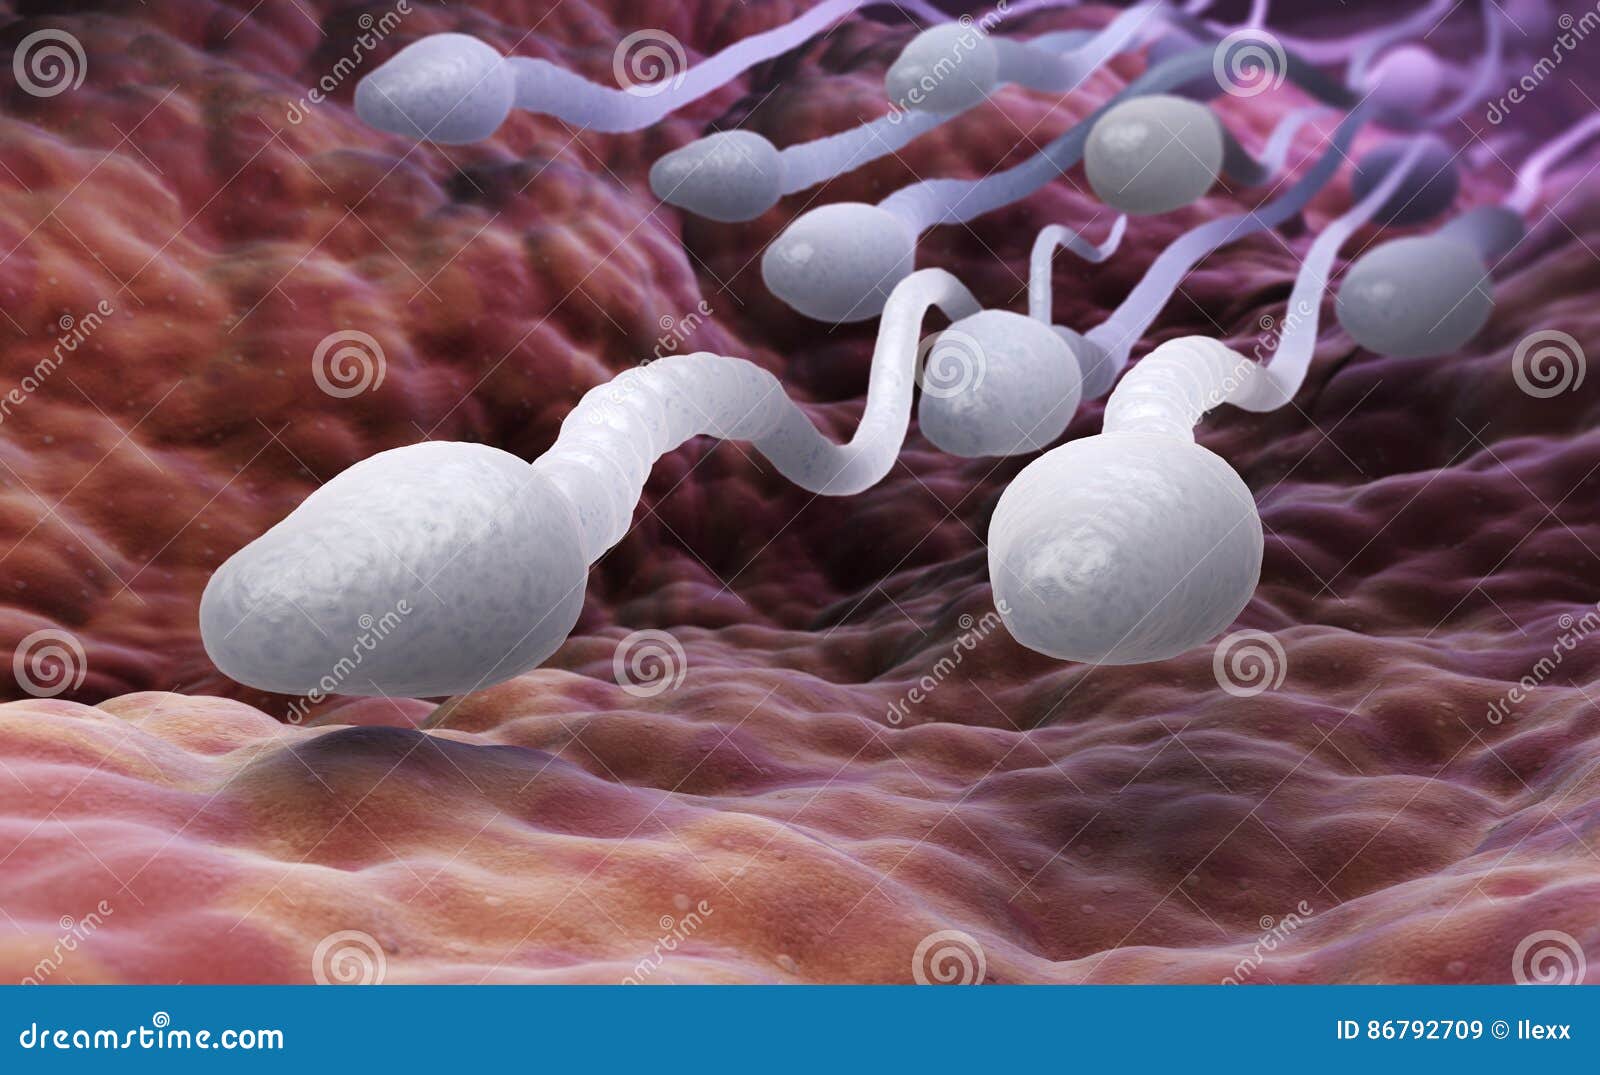 male sperm cells